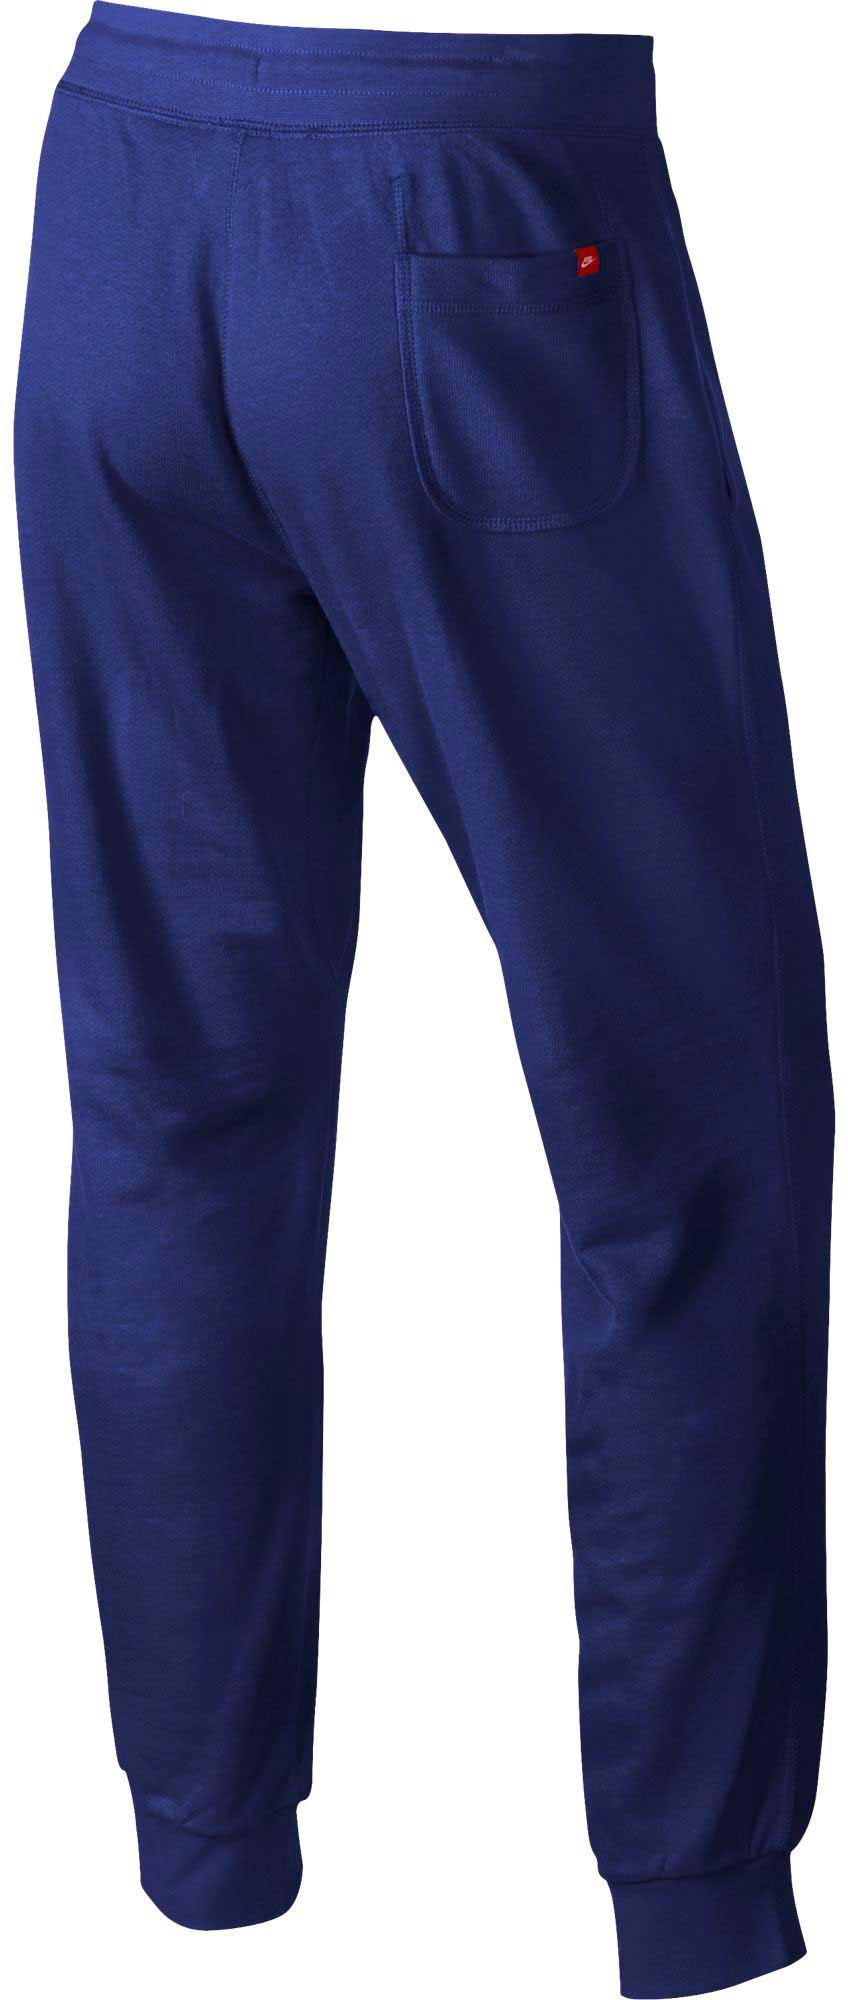 AW77 FT CUFF PANT - Pantaloni trening de bărbați